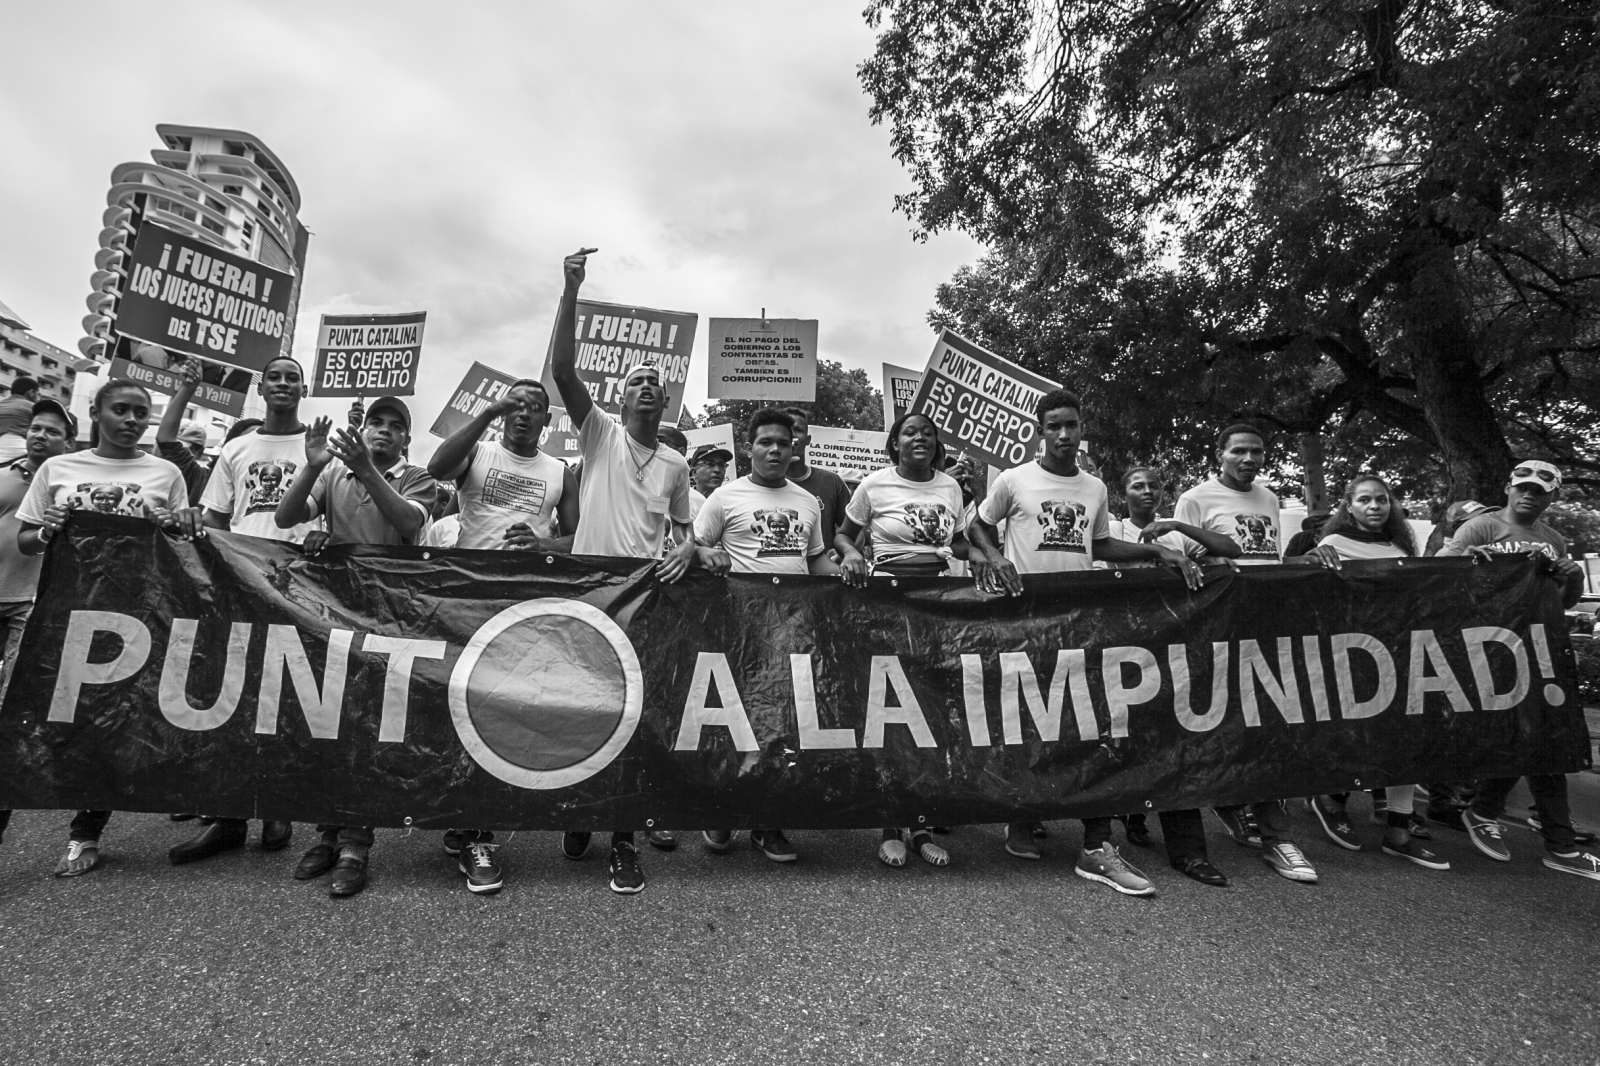 Dominican Republic: March Against Impunity